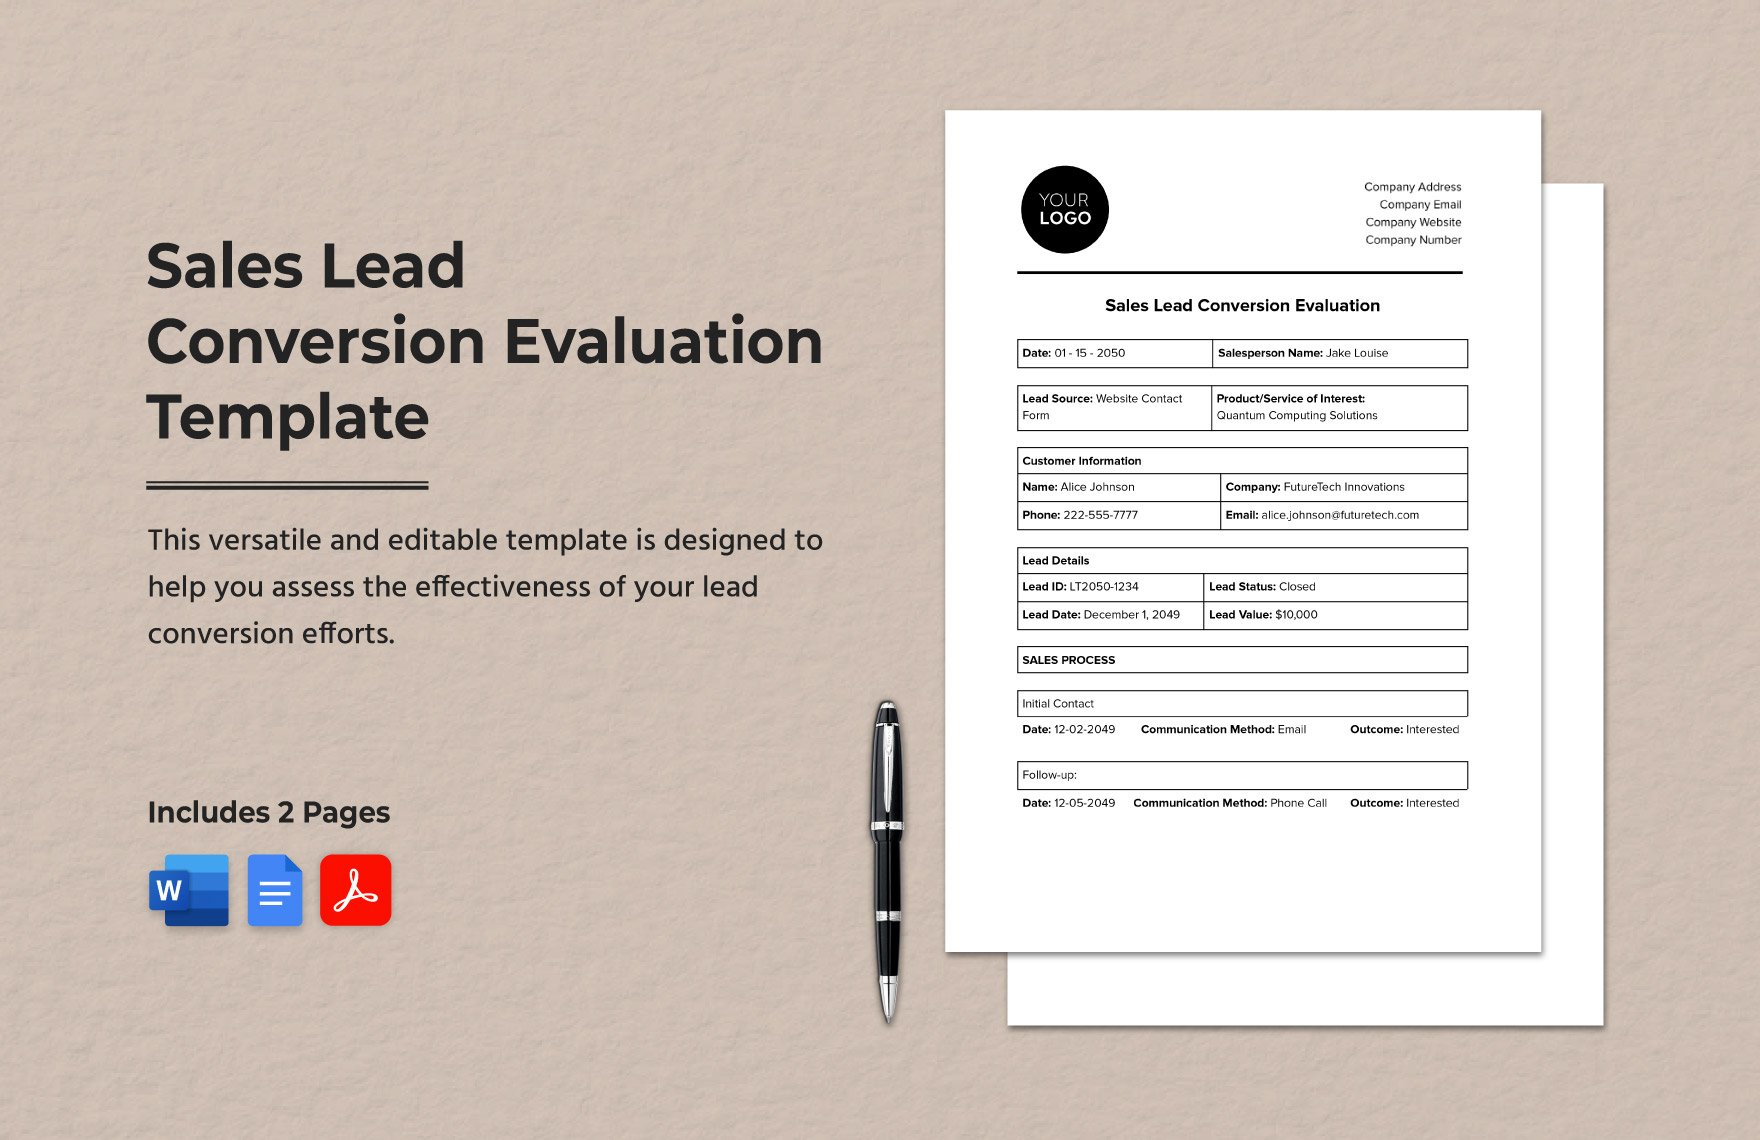 Sales Lead Conversion Evaluation Template